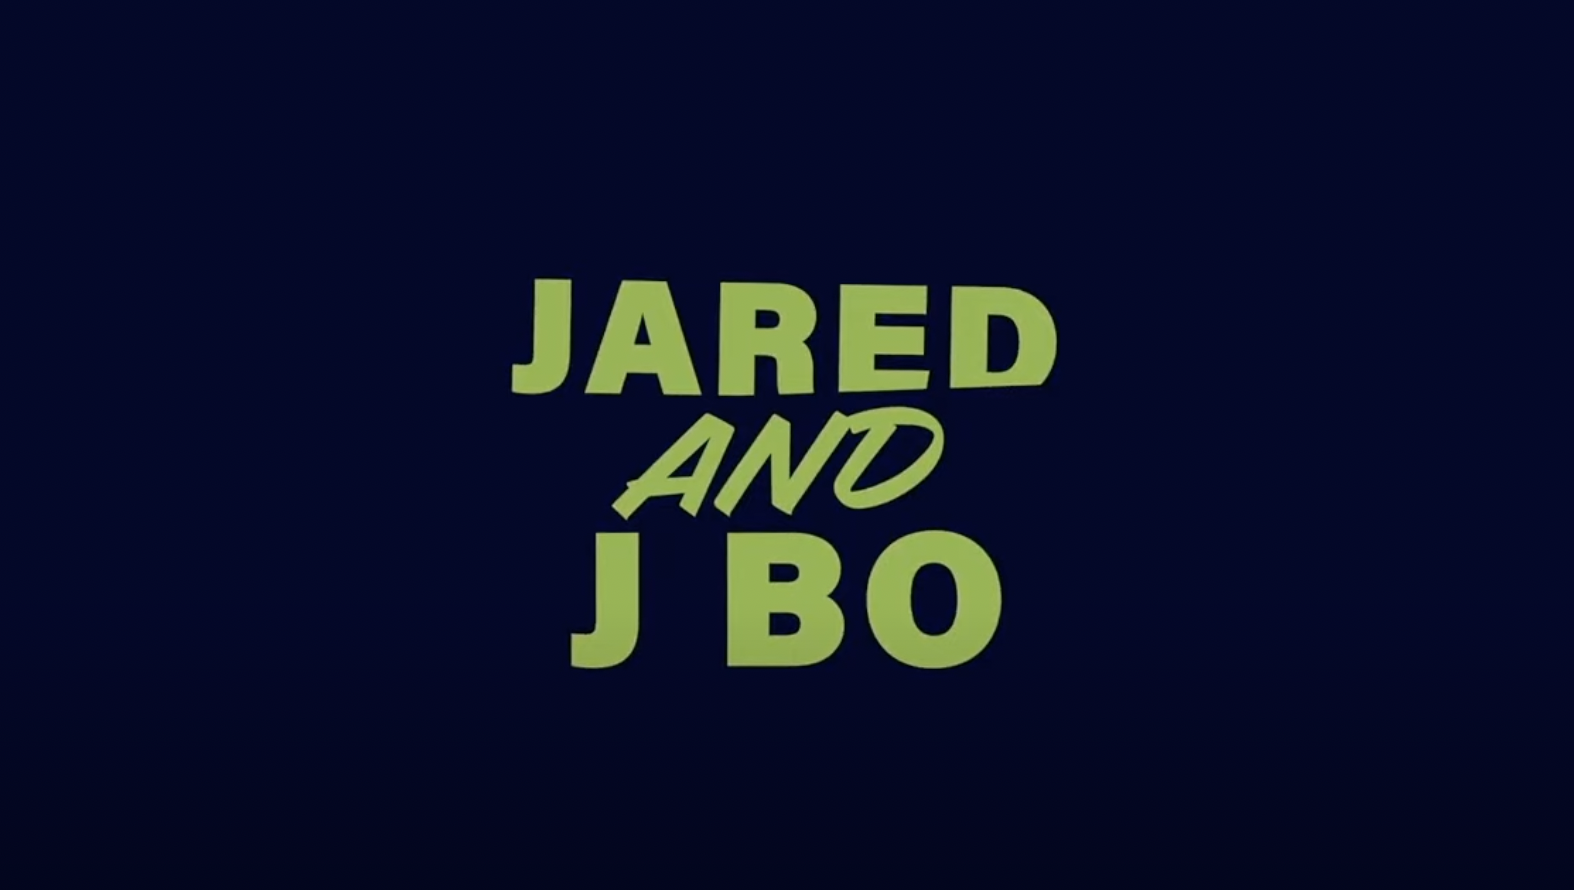 J-Bo & Jared: The state of Iowa’s sports betting story